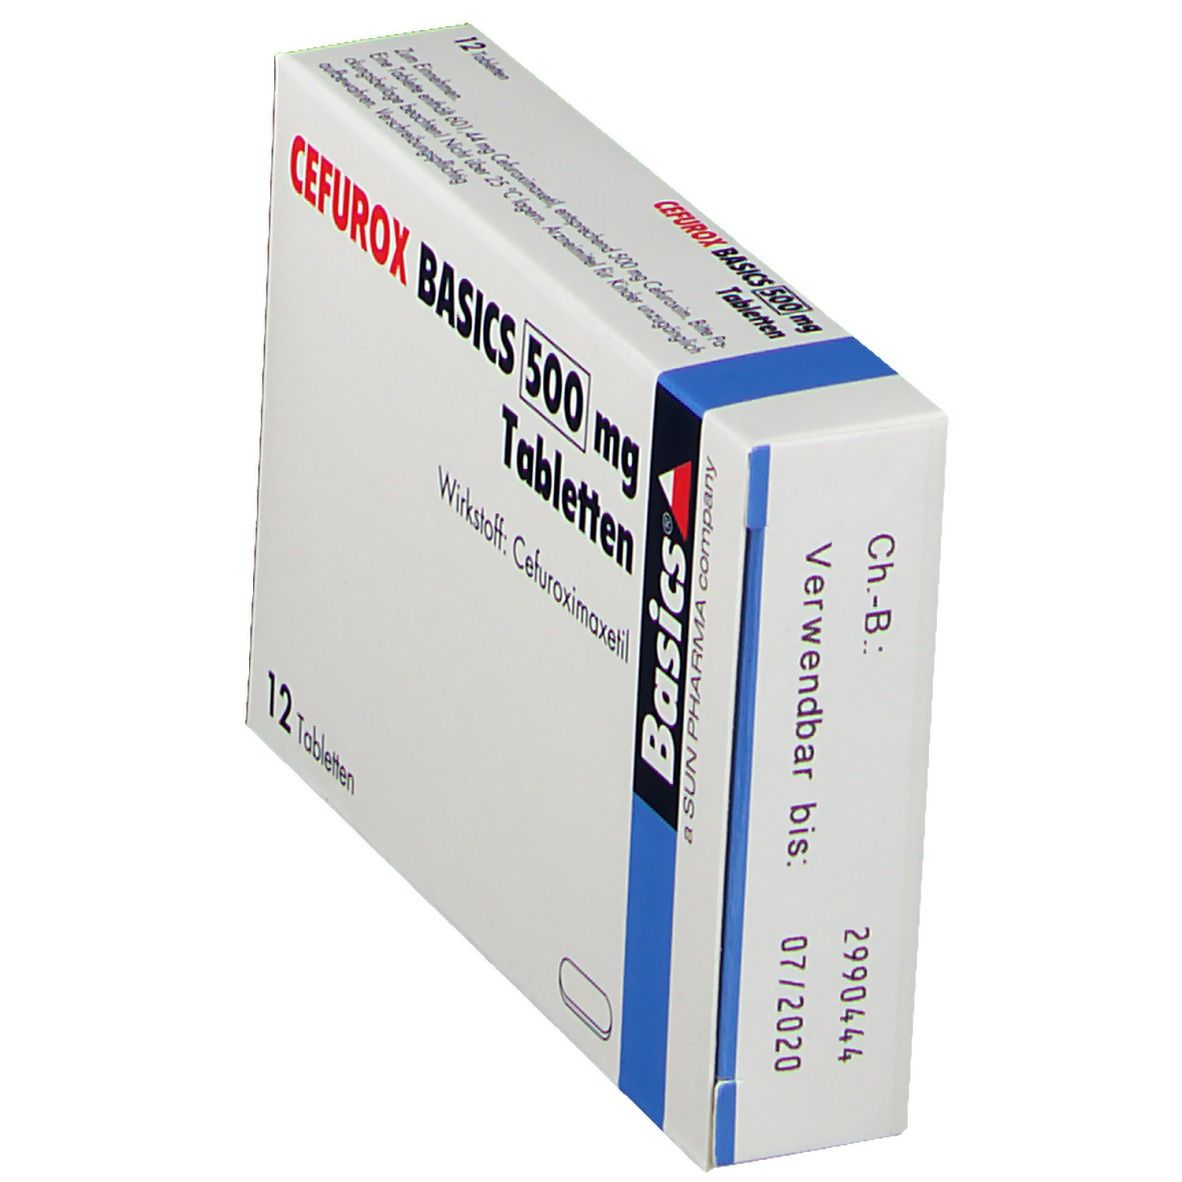 CEFUROX BASICS 500 mg